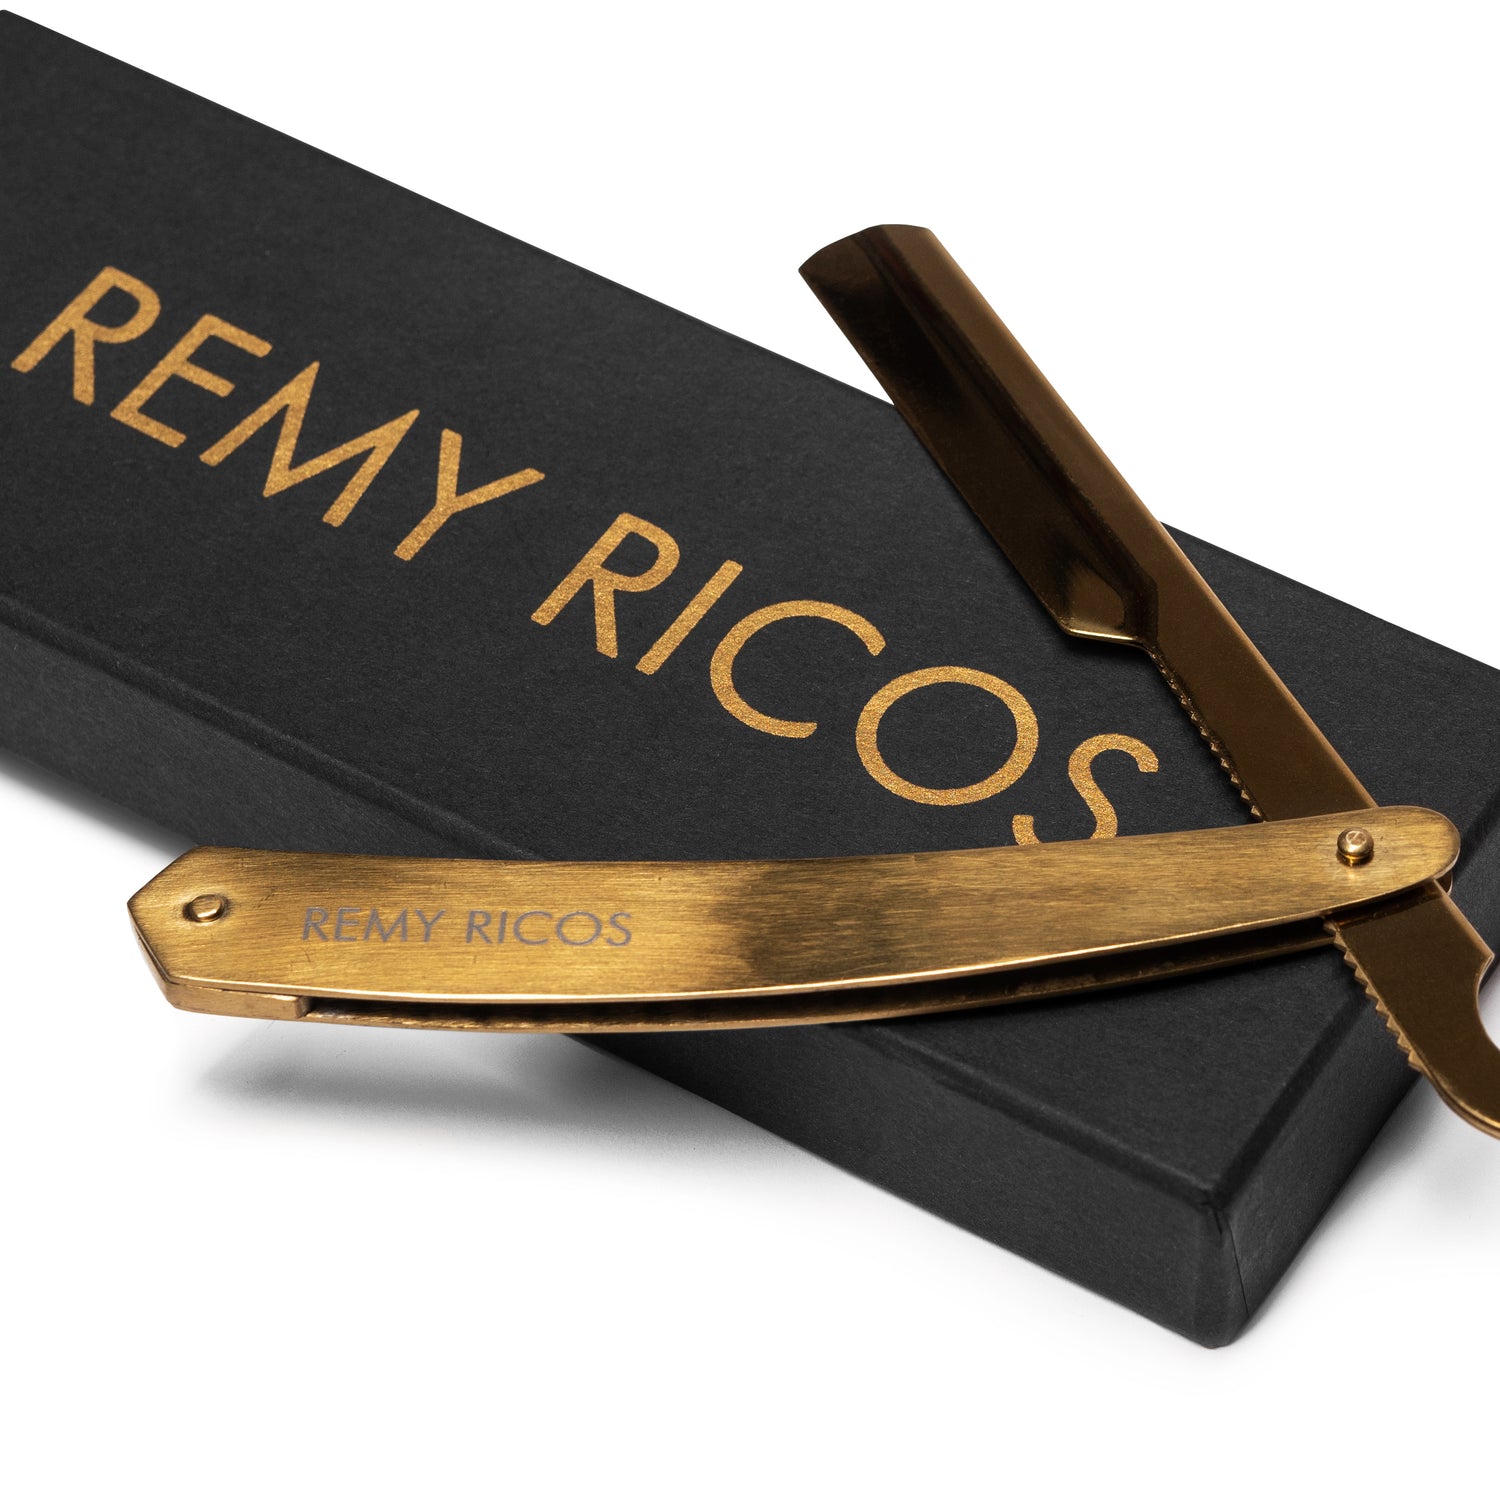 GOLD TURKISH RAZOR - REMY RICOS